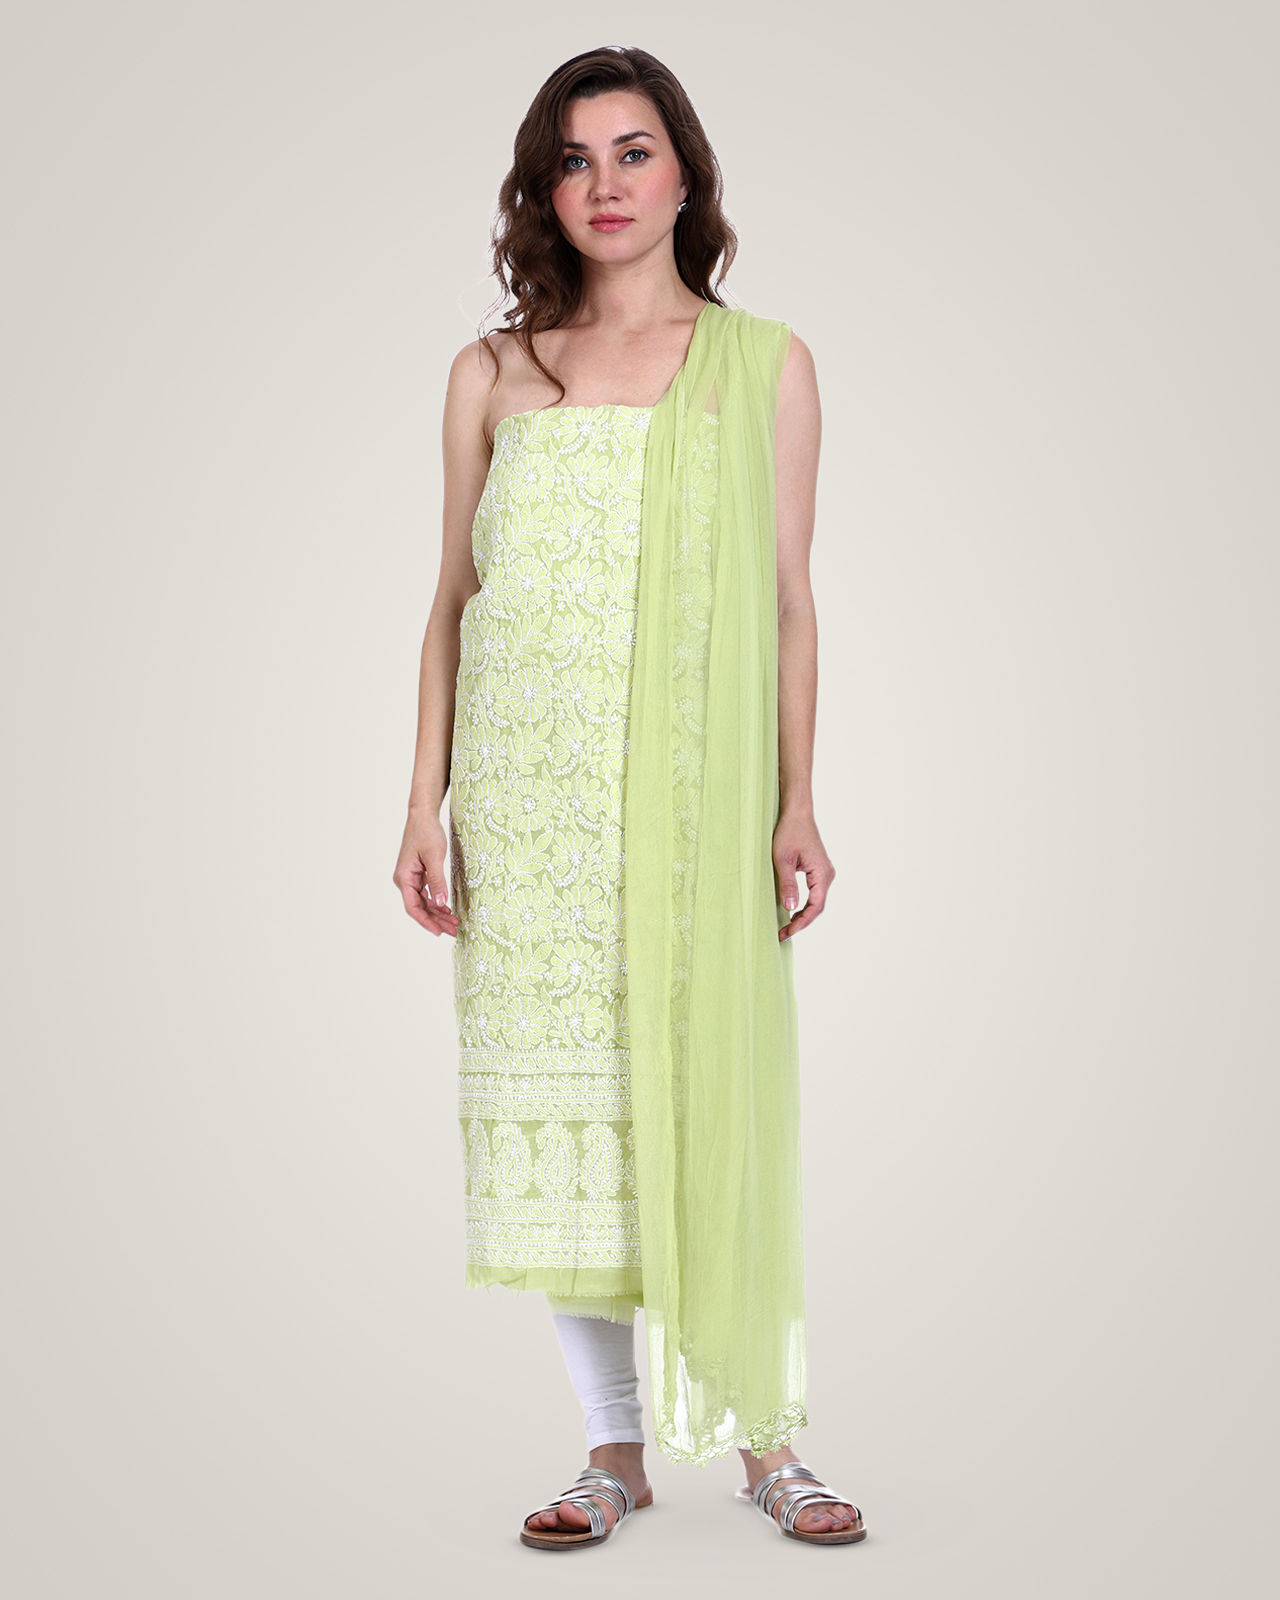 Nandini-Women-Lucknawi-Chikan-Dress-Material-Suit-Green-Shenaro_Lifestyle-N-473501-1